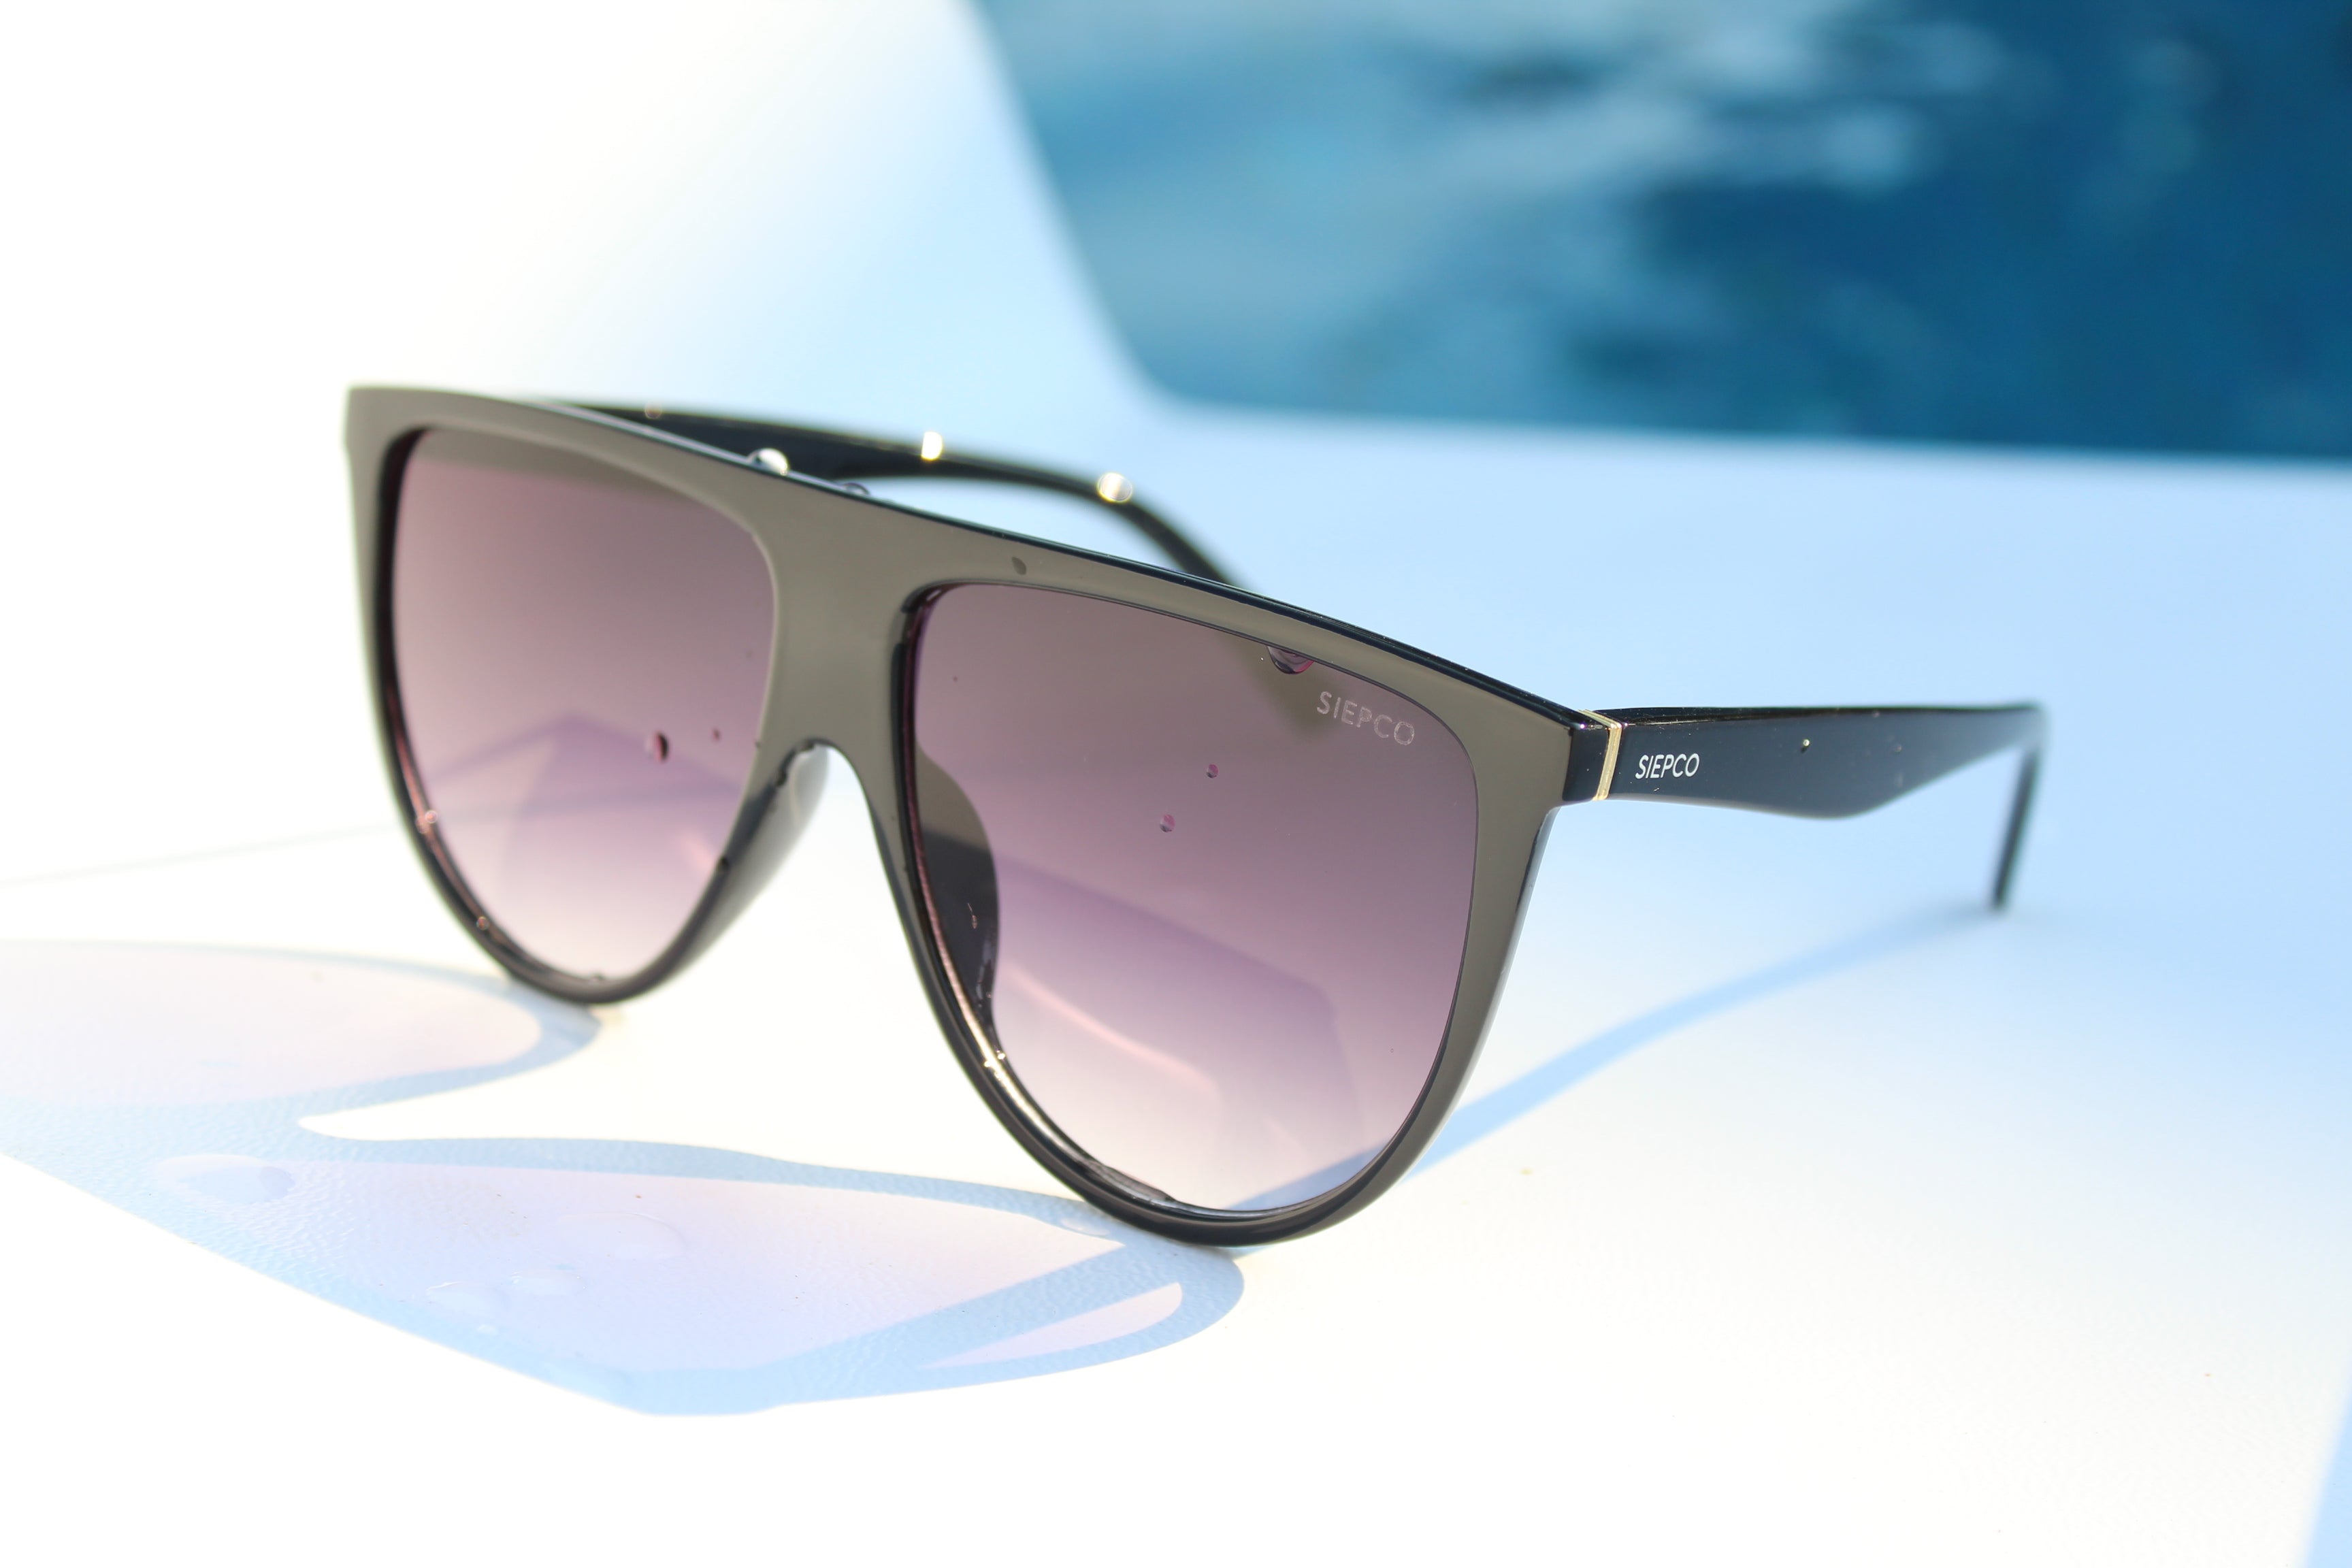 Affordable Good Quality Polarized Sunglasses Canada